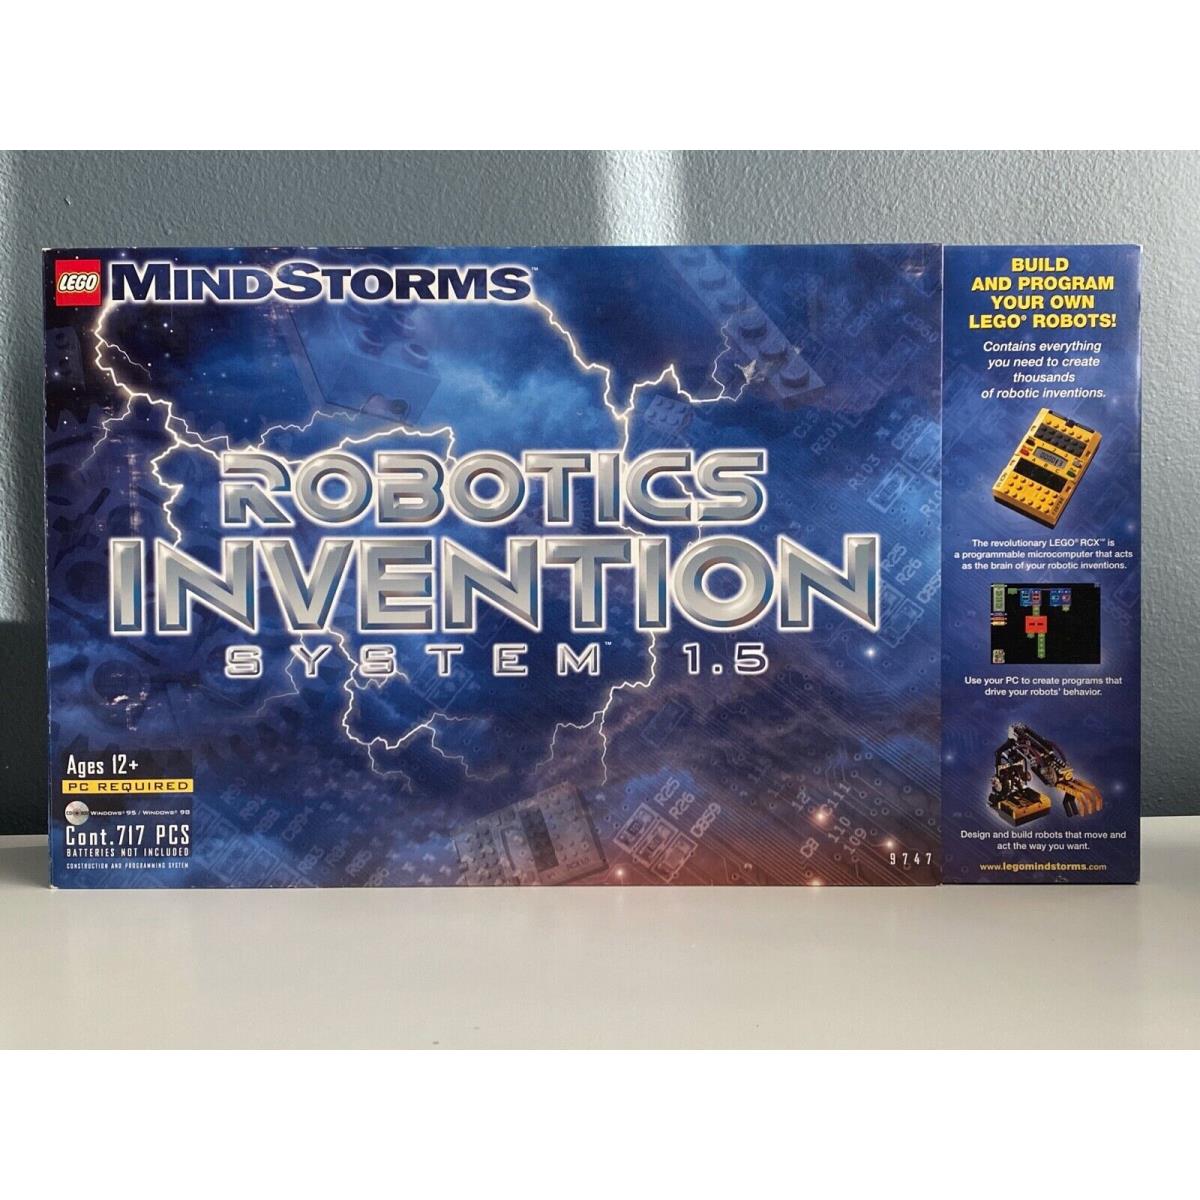 Lego Mindstorms Rcx 9747 Robotics Invention System Version 1.5 Super Rare